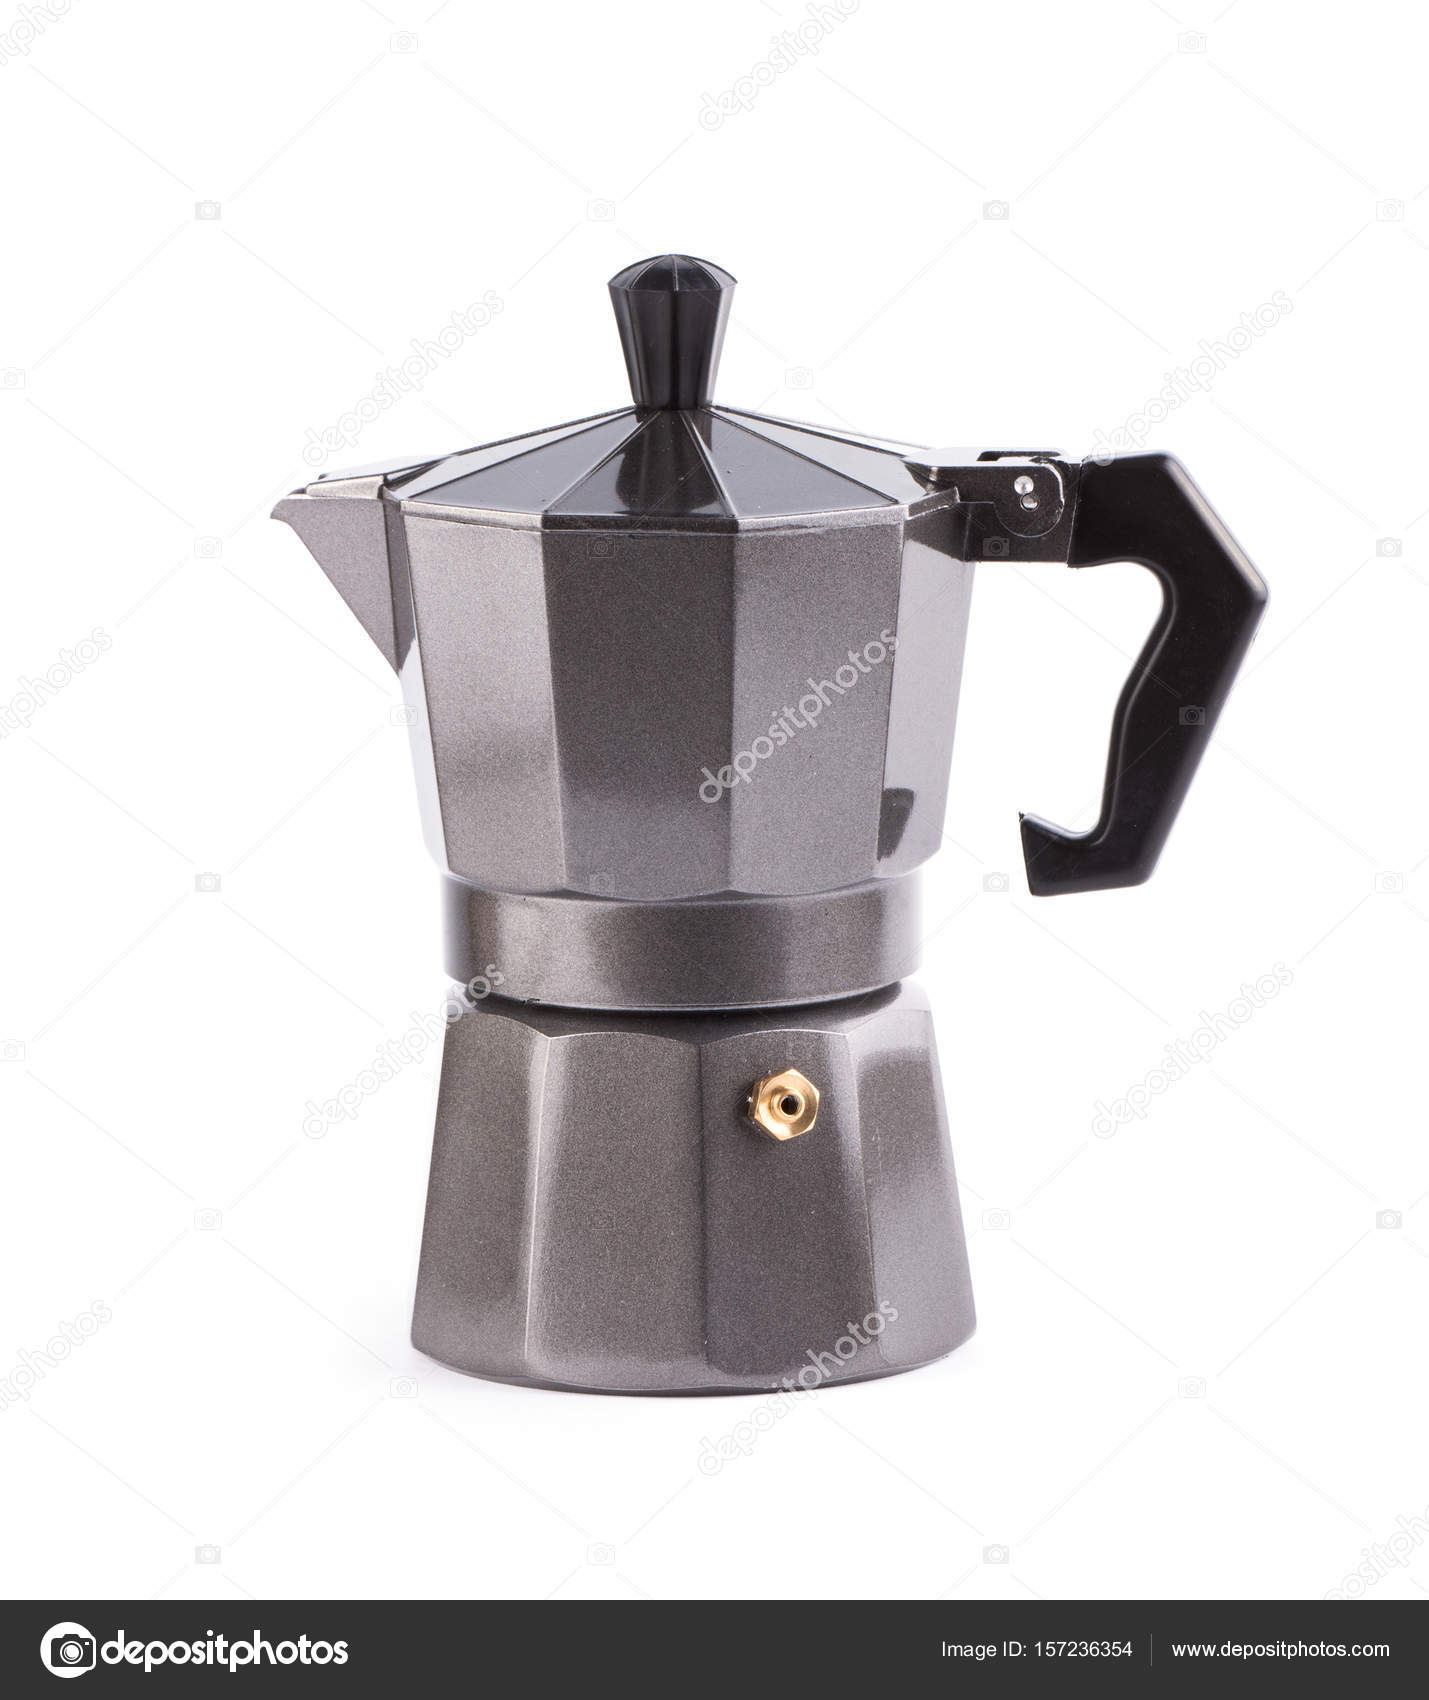 https://st3.depositphotos.com/4189501/15723/i/1600/depositphotos_157236354-stock-photo-geyser-coffee-maker-isolated-on.jpg